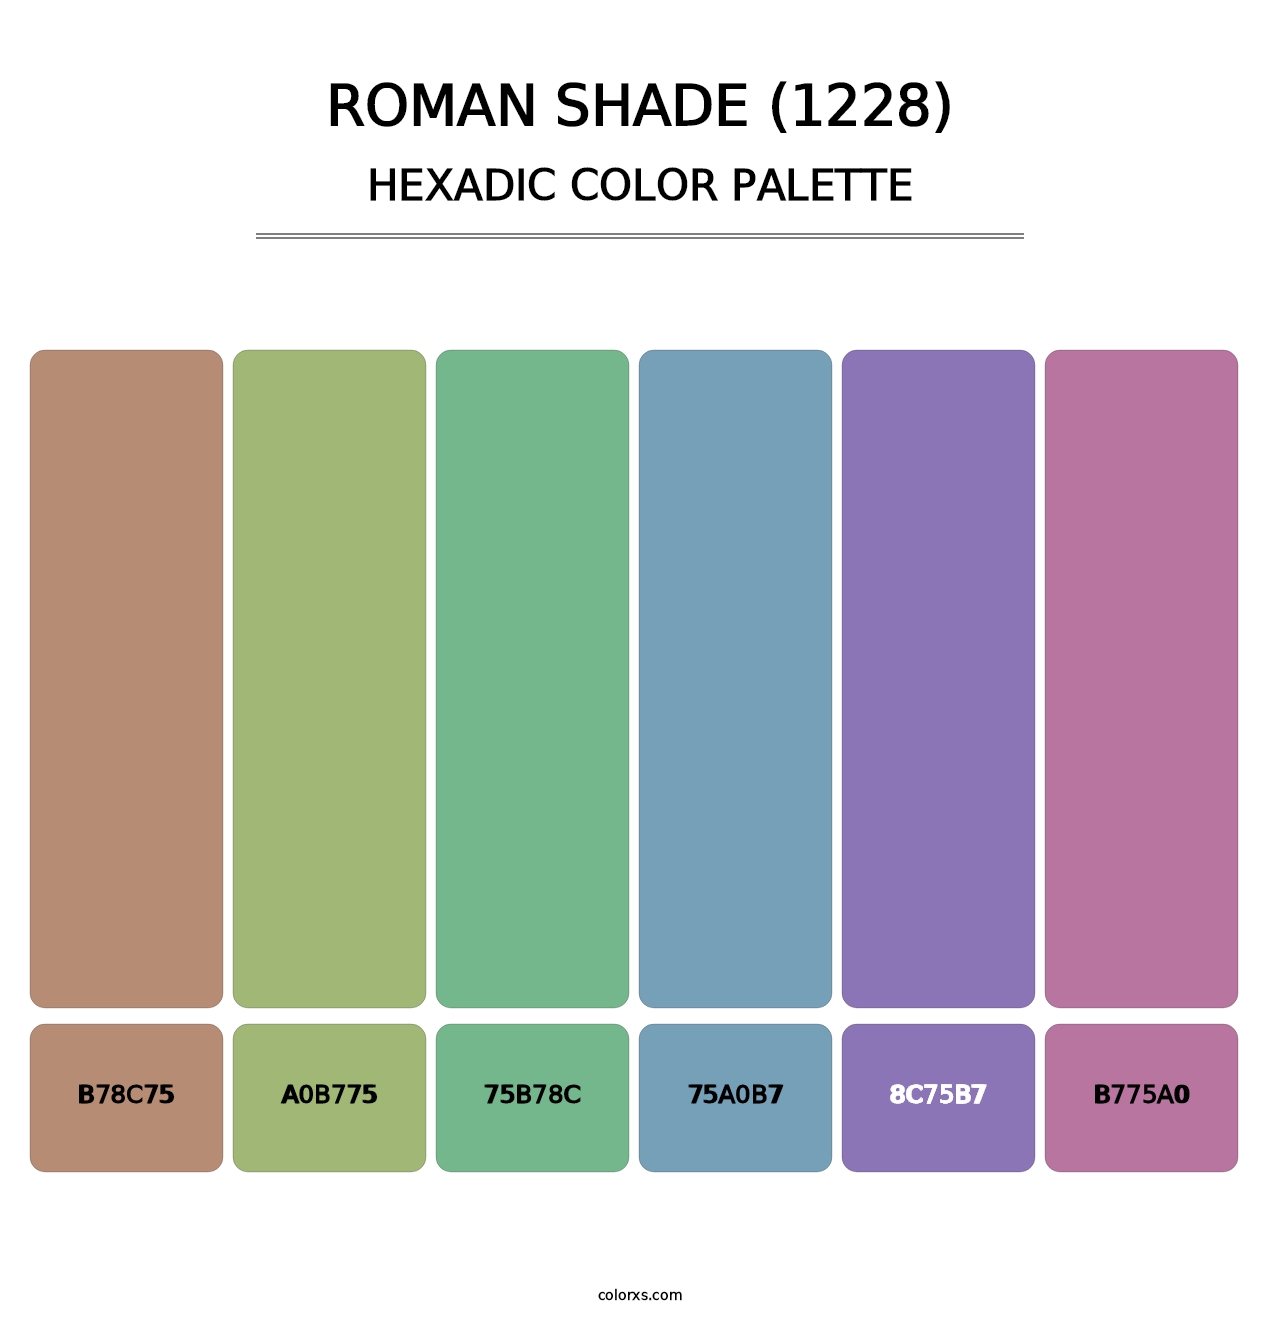 Roman Shade (1228) - Hexadic Color Palette